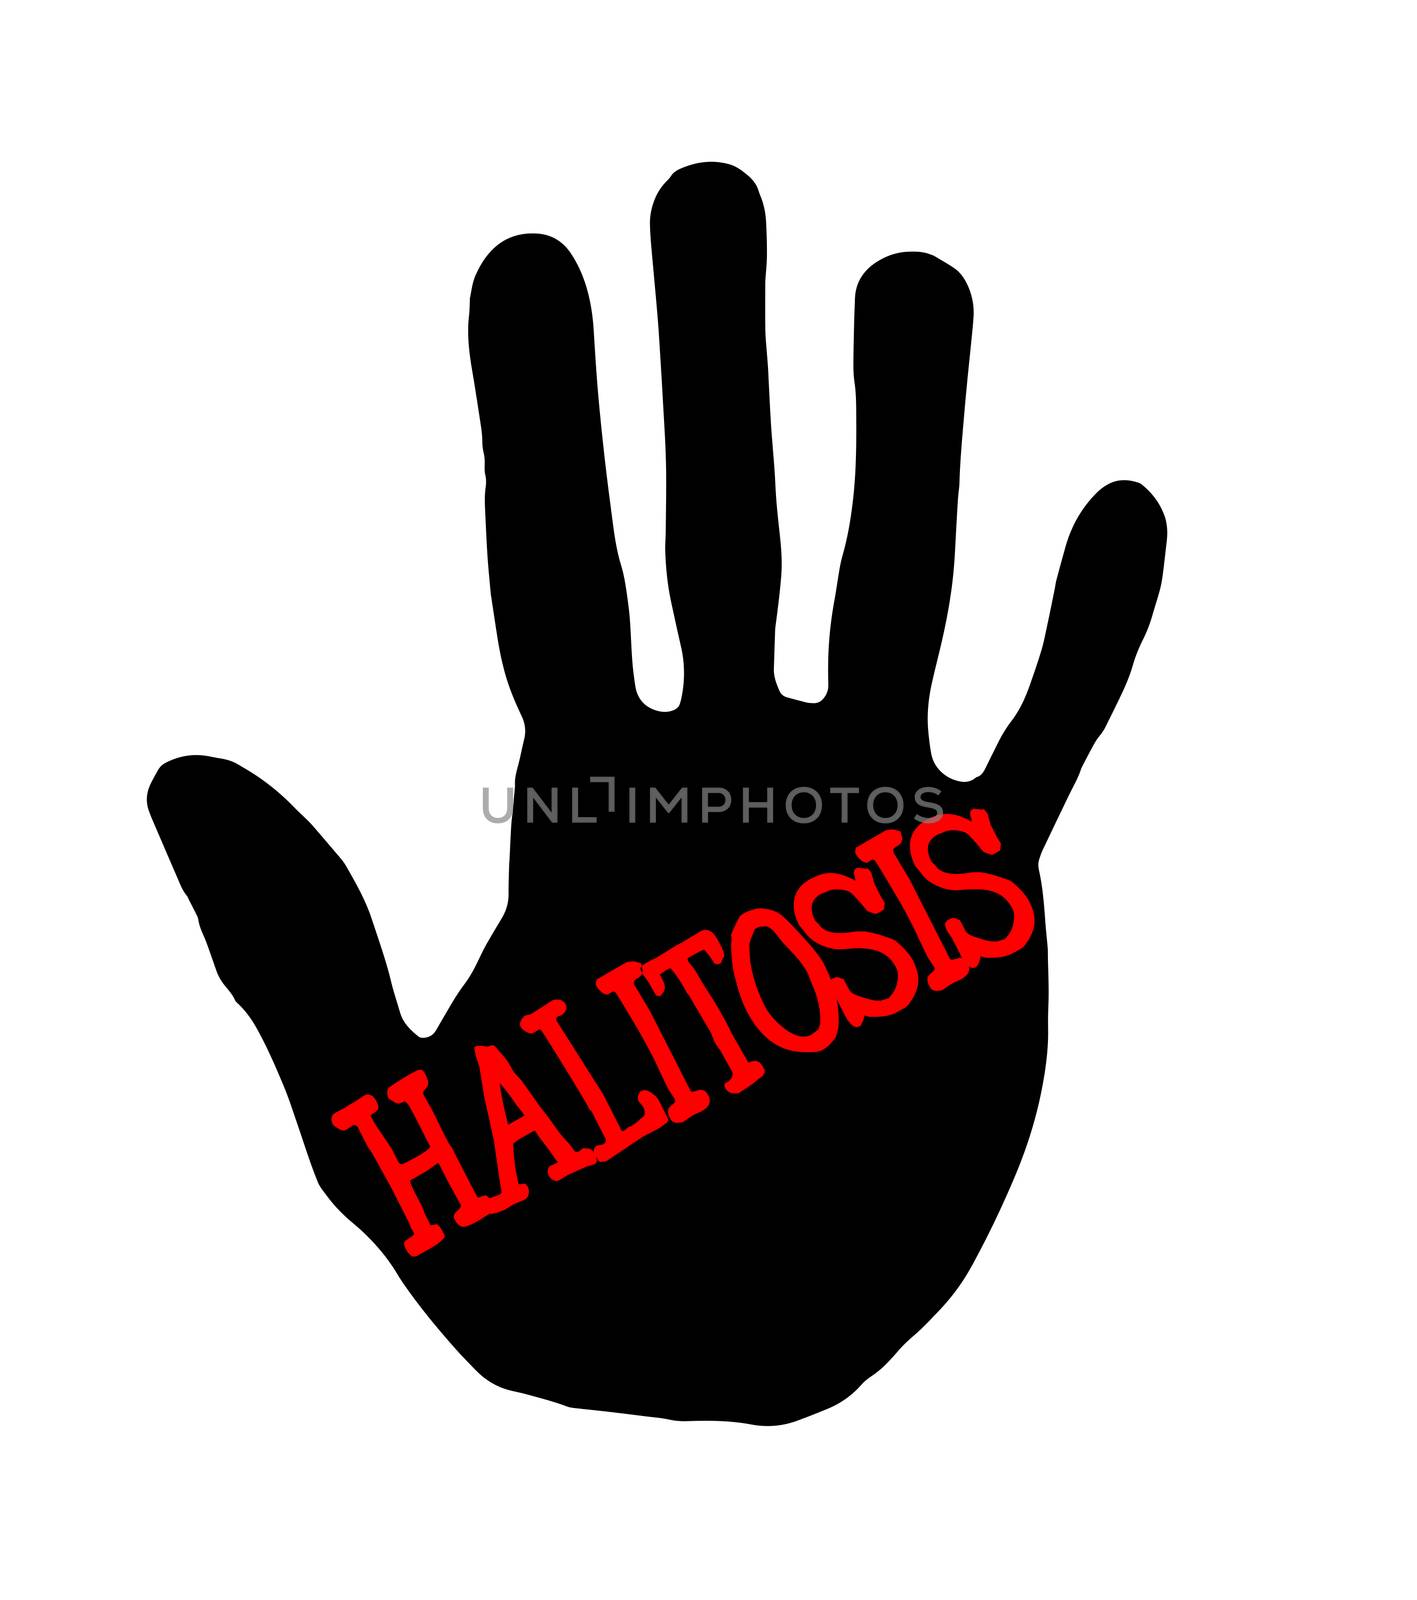 Handprint halitosis by Milovan